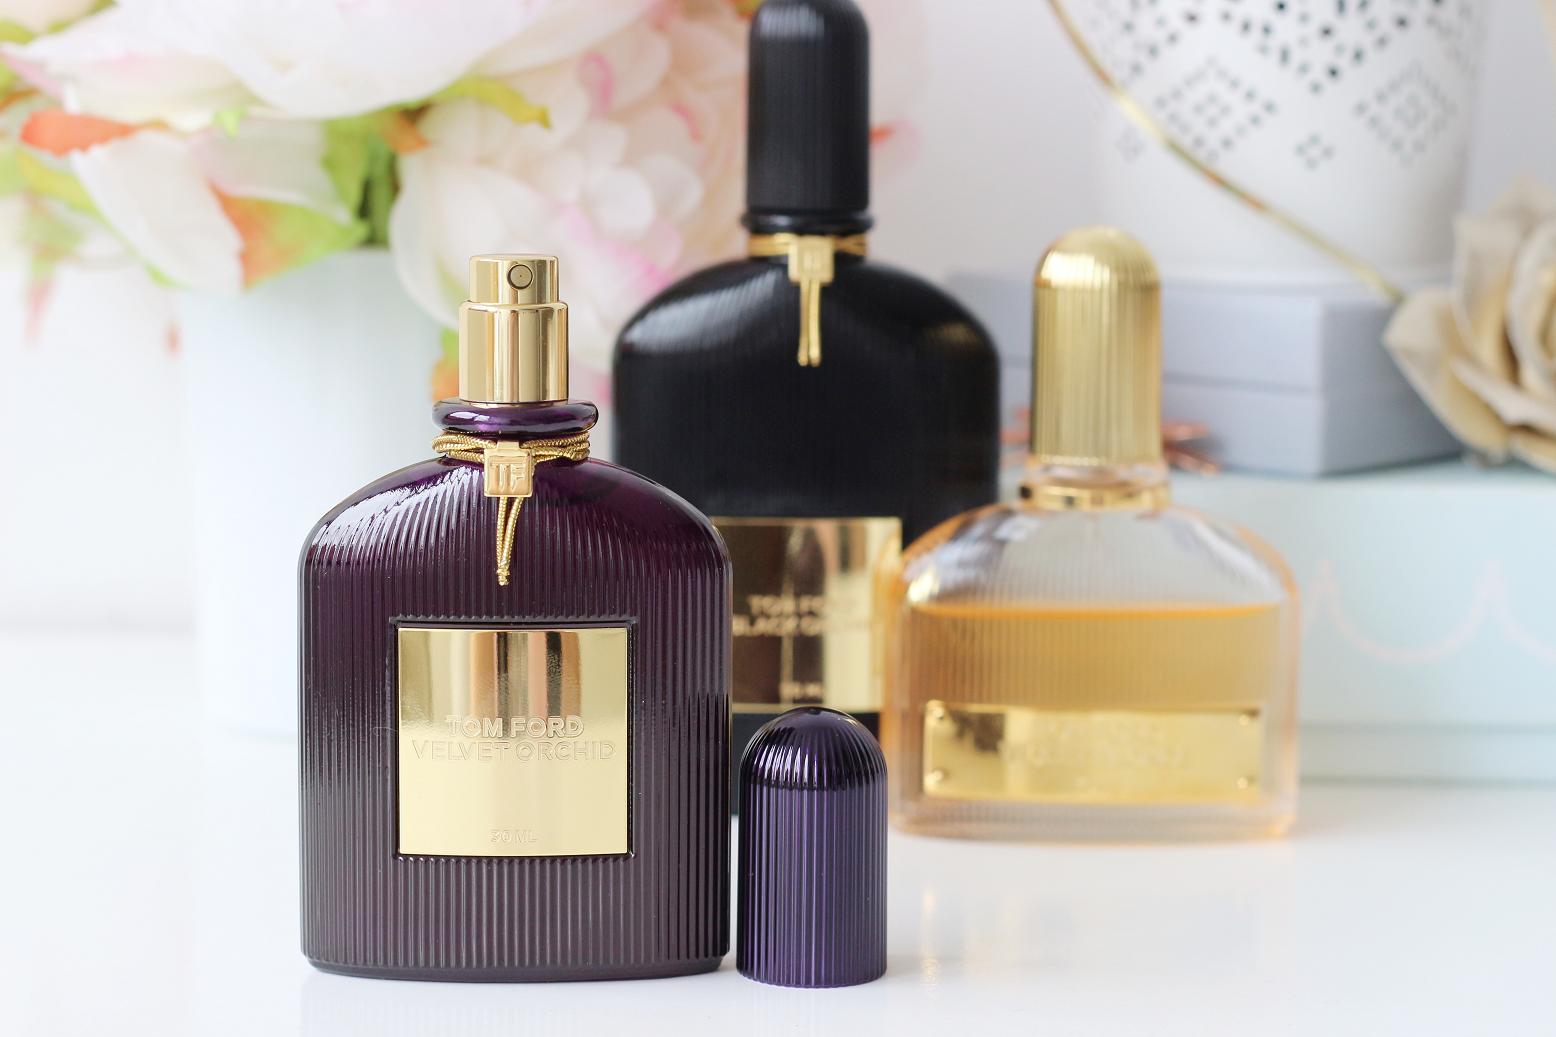 Tom Ford Velvet Orchid eau de parfum | BeautyLoves